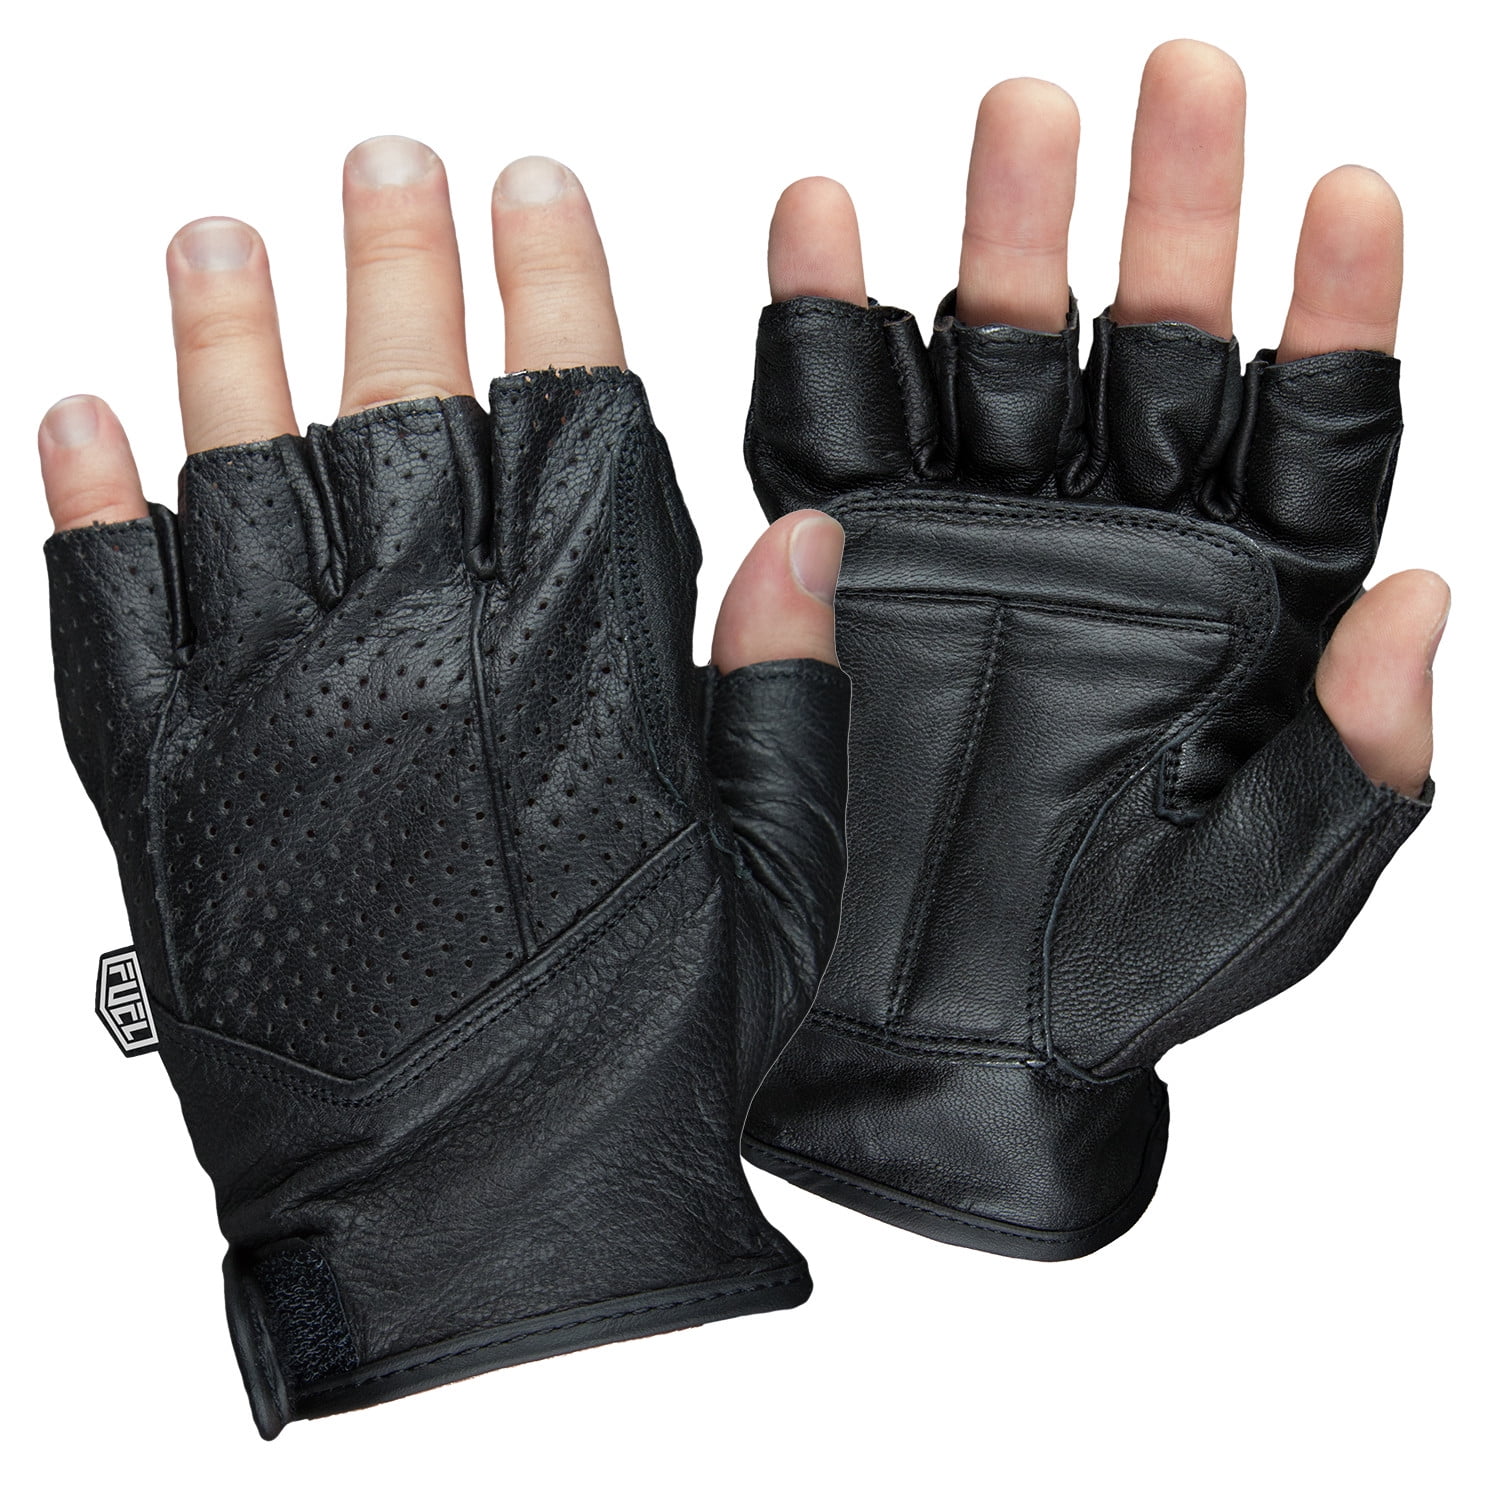 Details about  / Black Sport Training Motorcycle Driving Men/'s Fingerless Leather Gloves Biker Z3